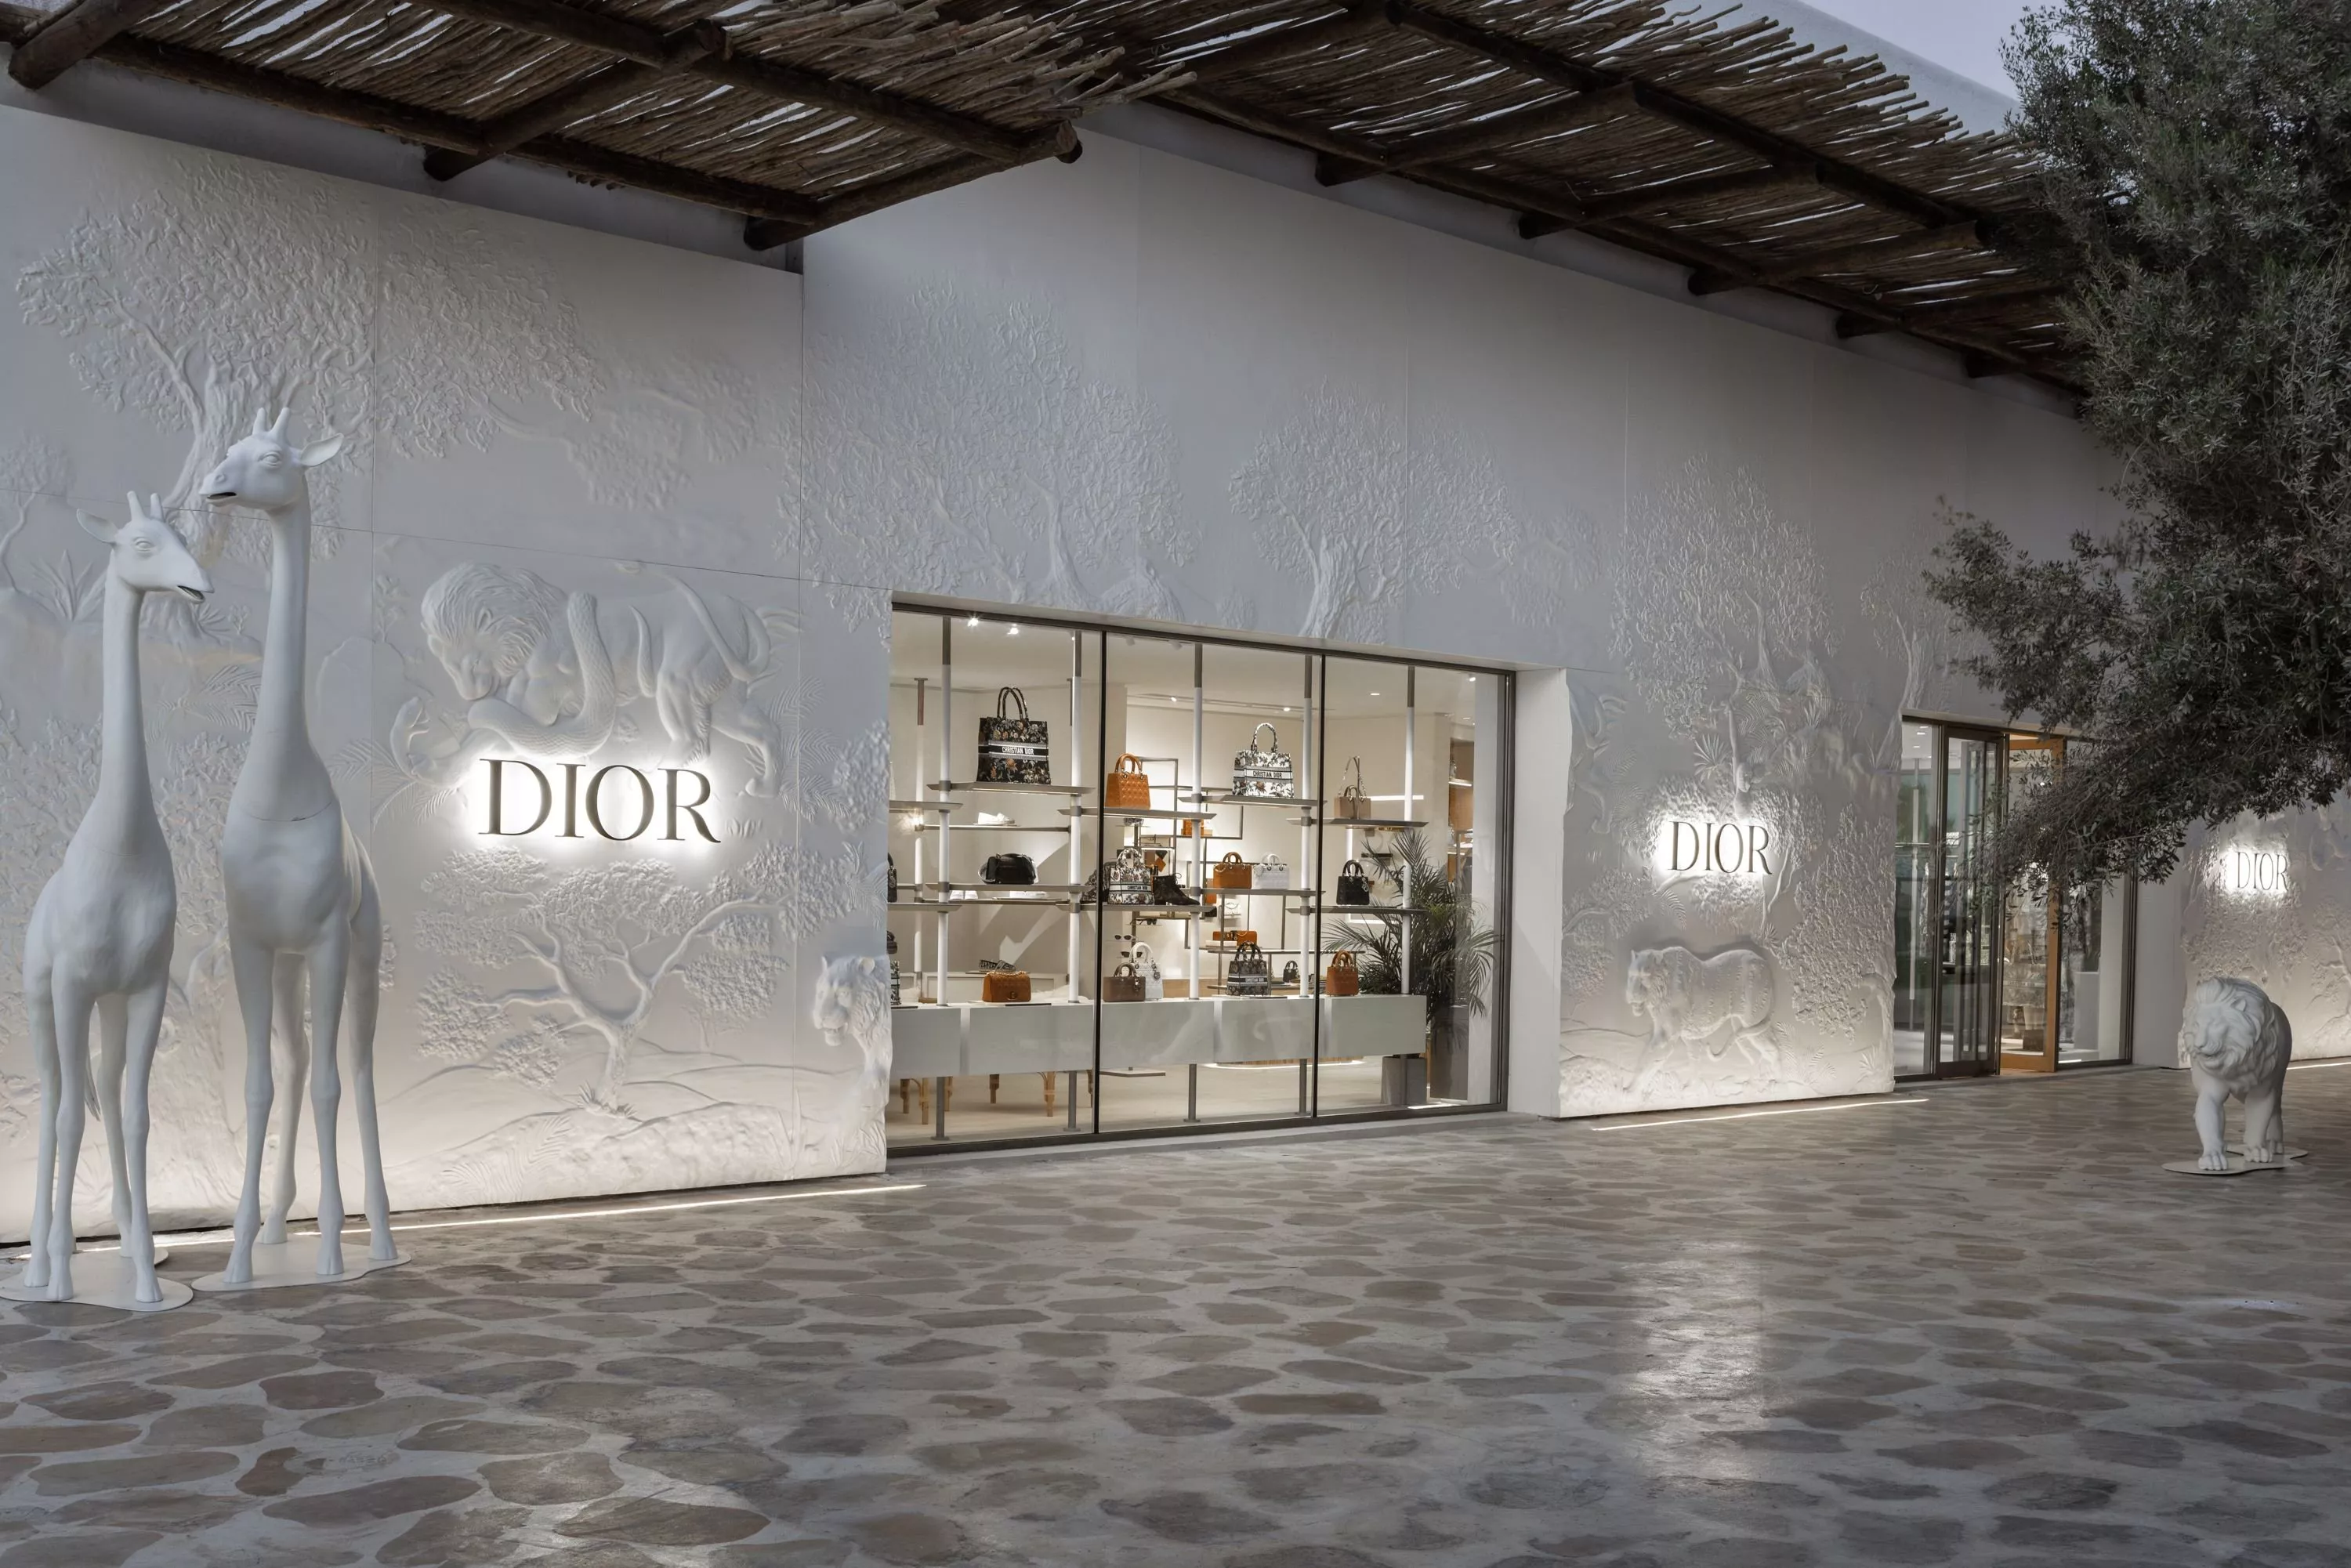 Dior تكشف عن سلسلة من متاجرها الدائمة والمؤقّتة في قلب الدوحة